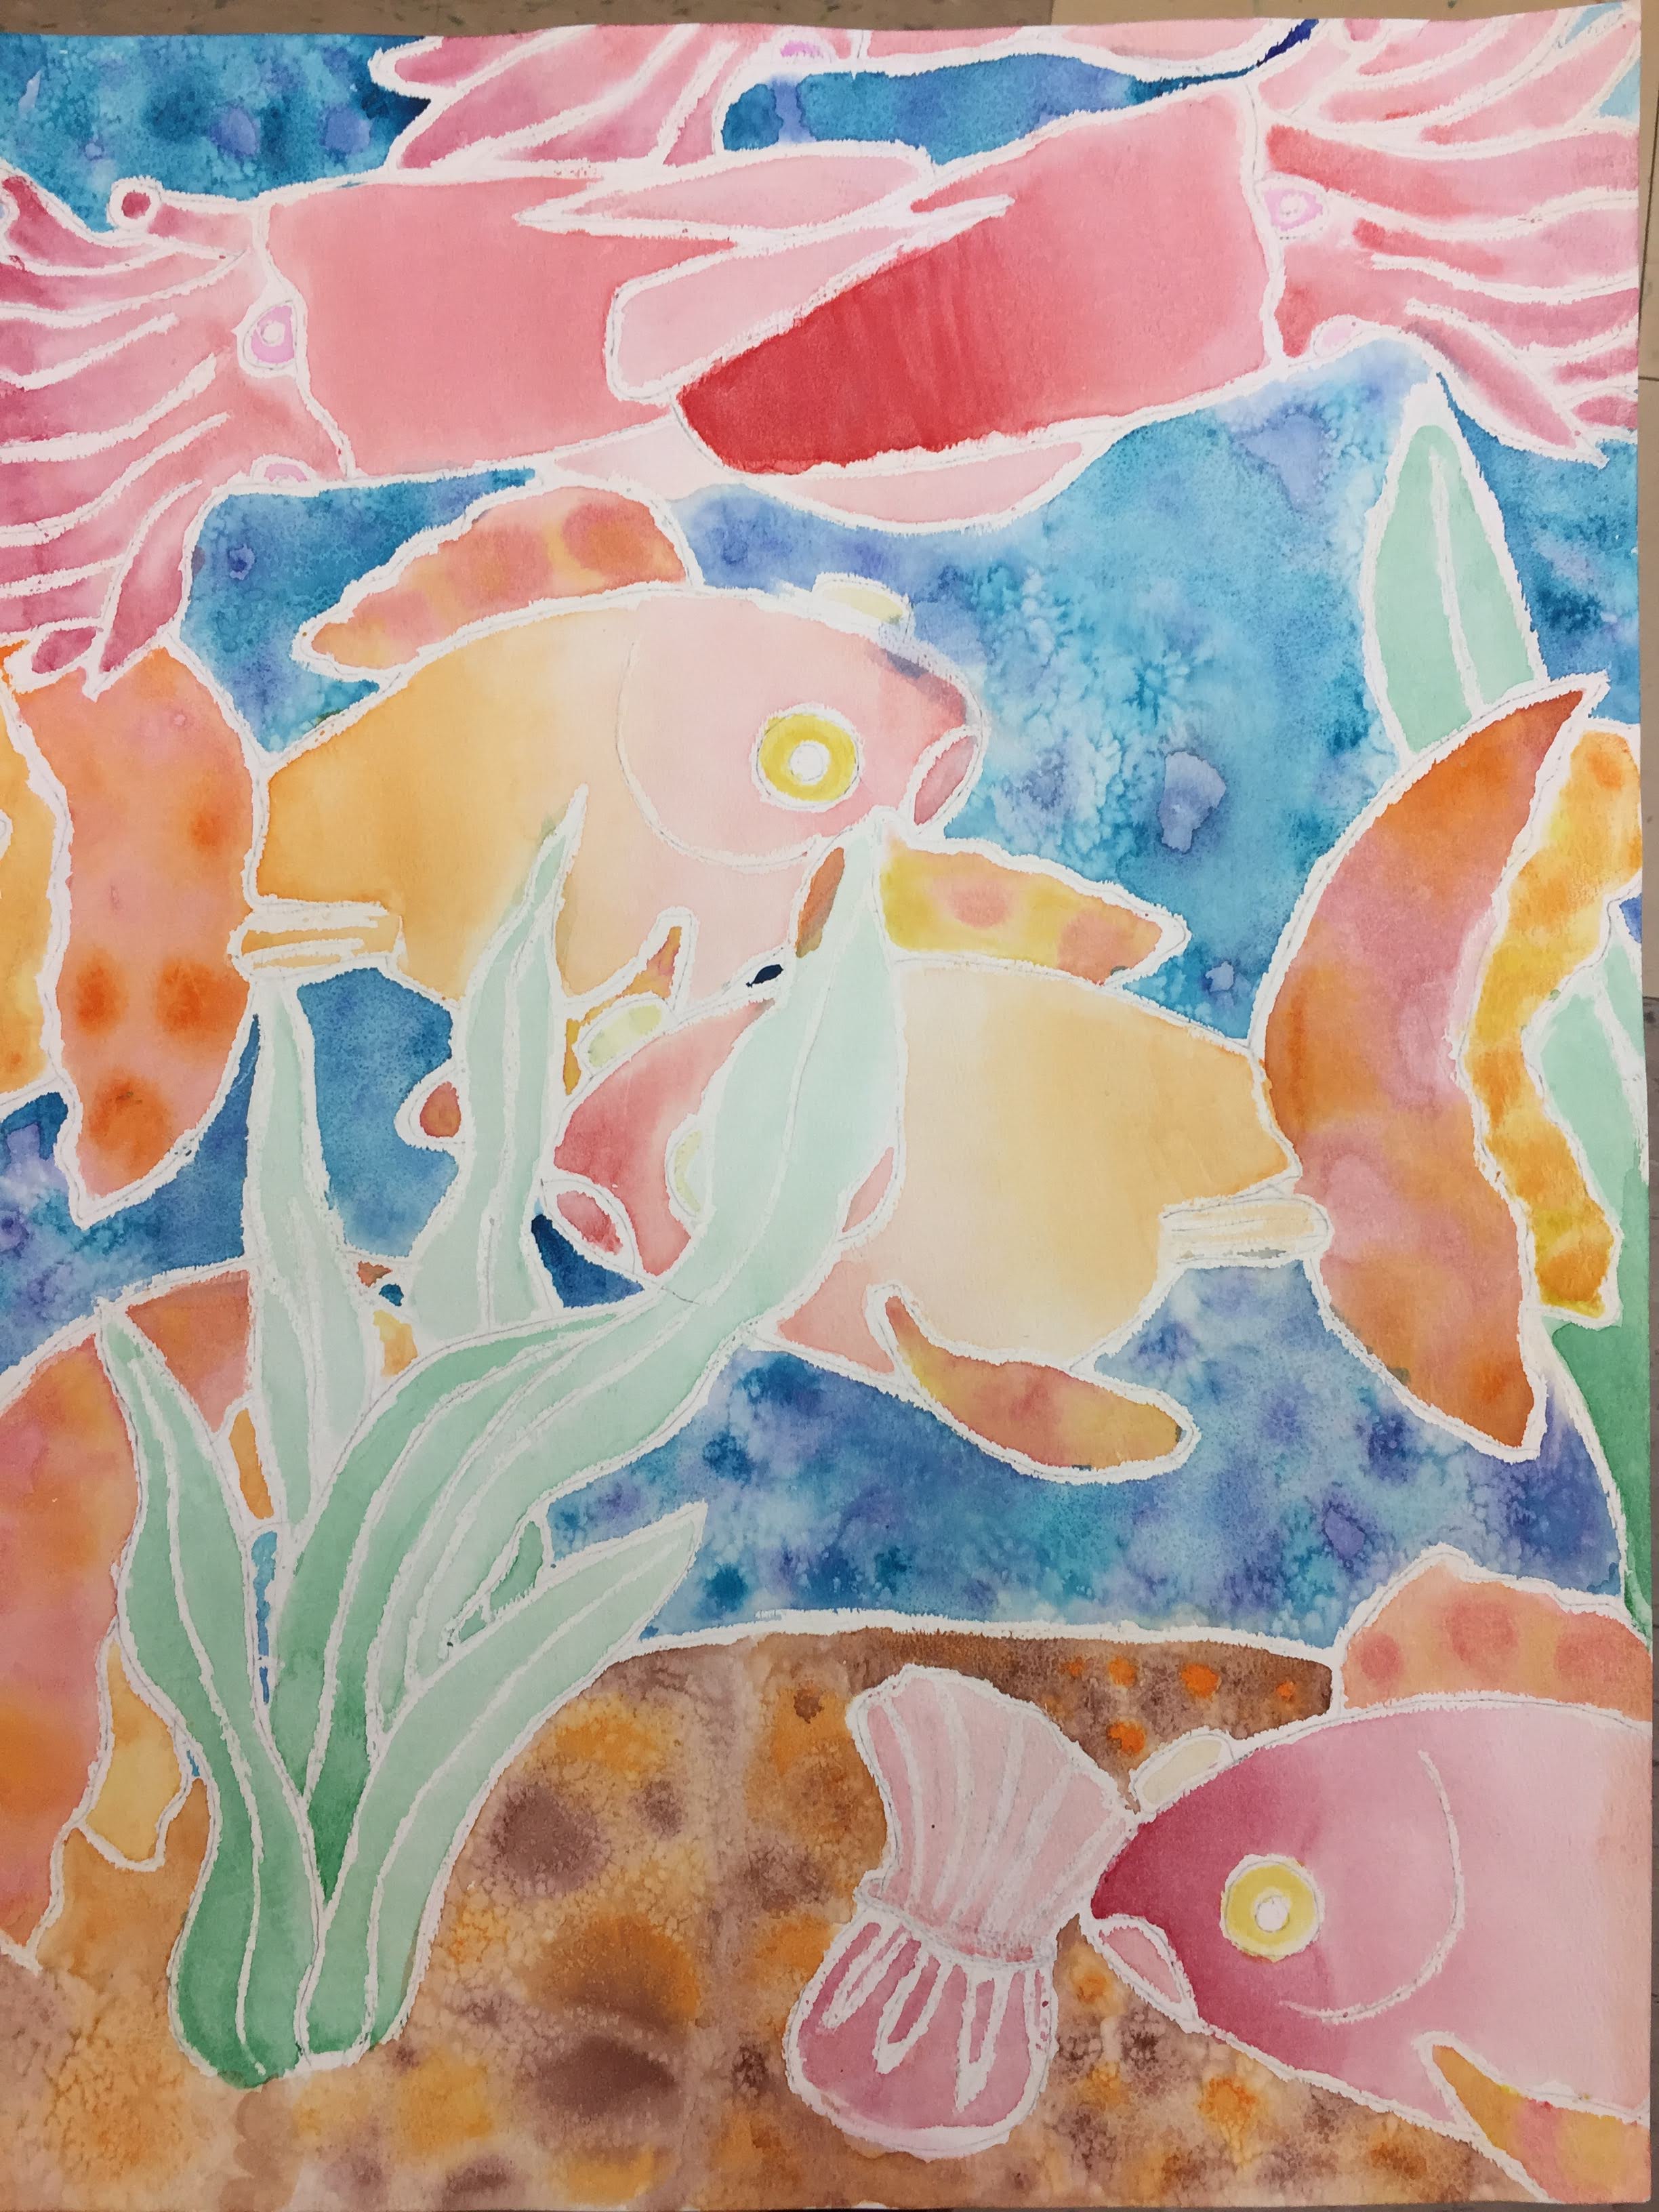 Watercolor And Crayon Resist Fish Paintings | Ms. Amsler's Artroom